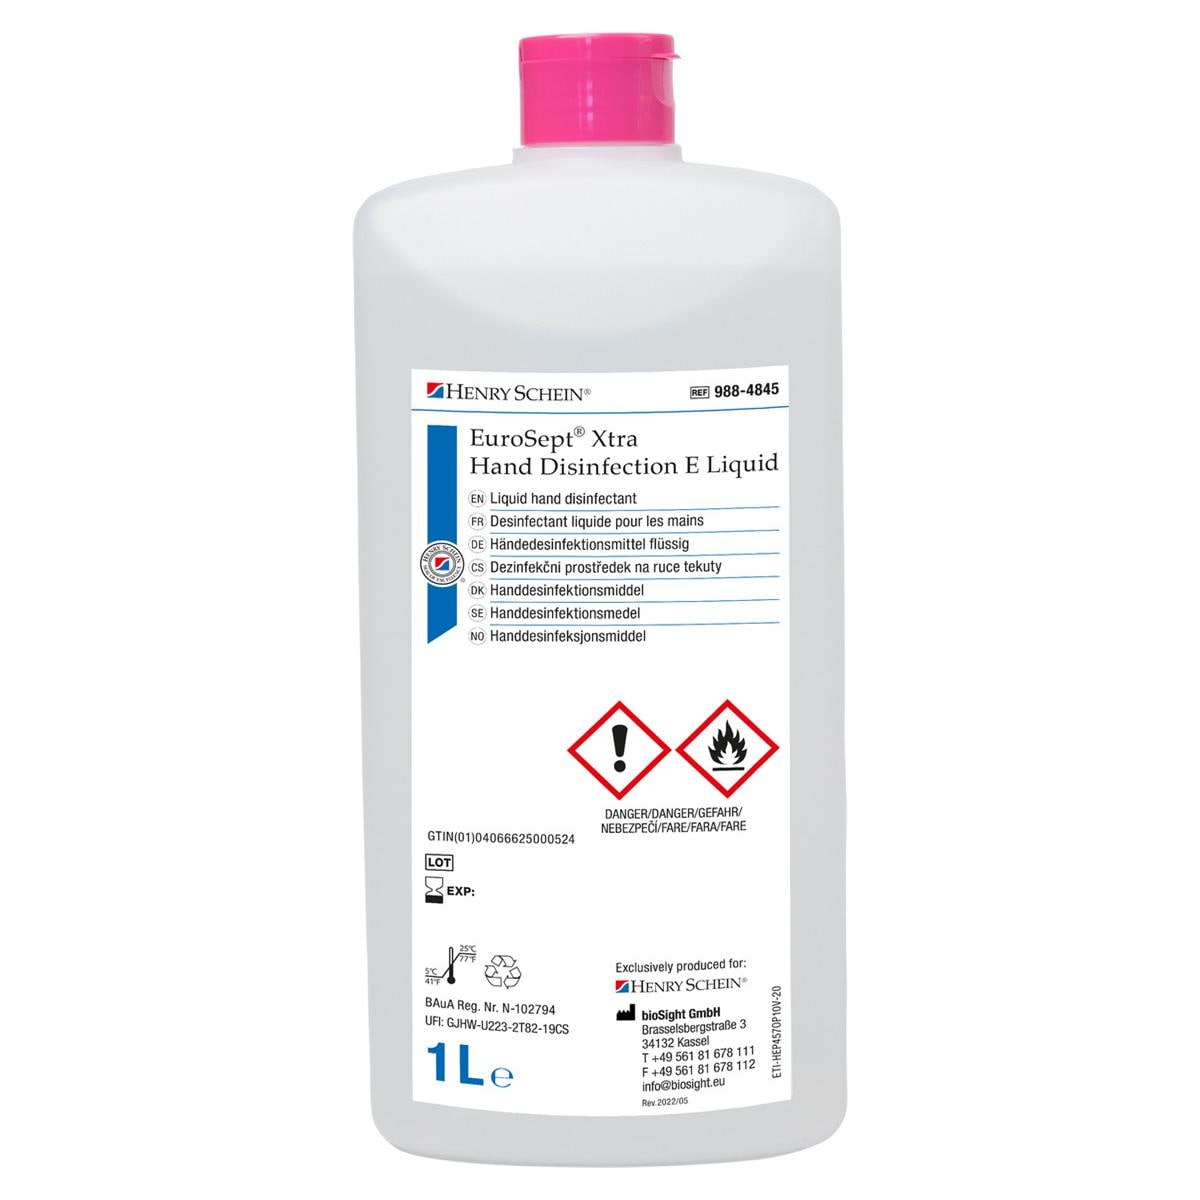 EuroSept Xtra Hand Disinfection E Liquid - Flacon, 1 litre